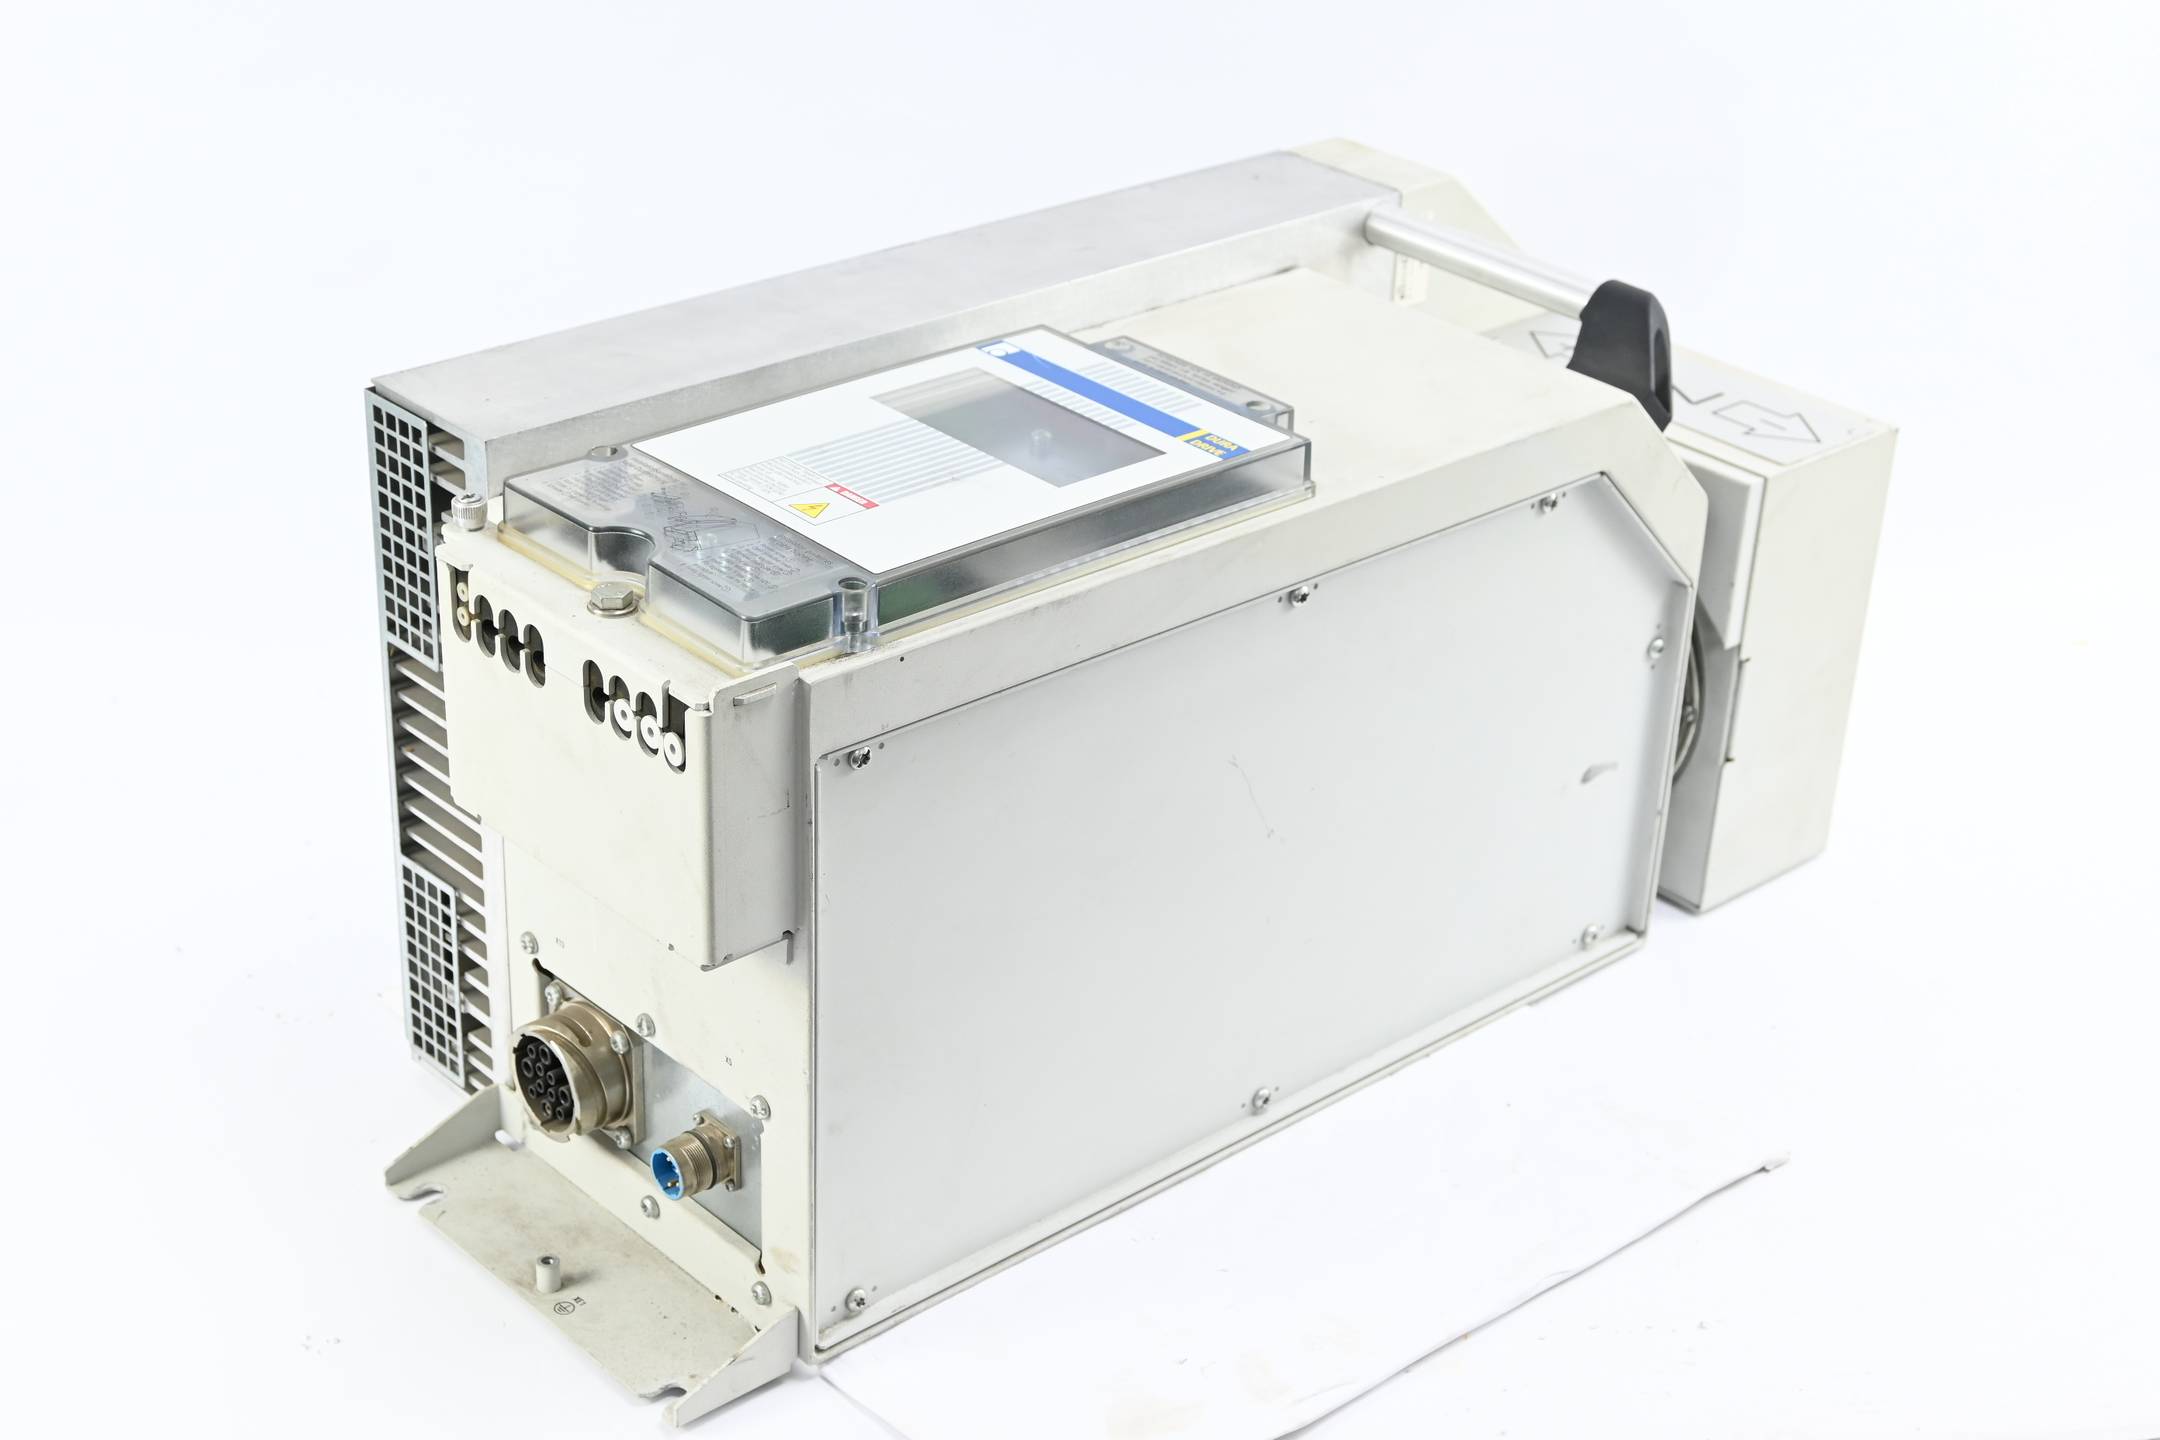 Rexroth Dura Drive Kompaktumrichter HDC01.1A100-N-PB01-01-FW ( R911292314 )